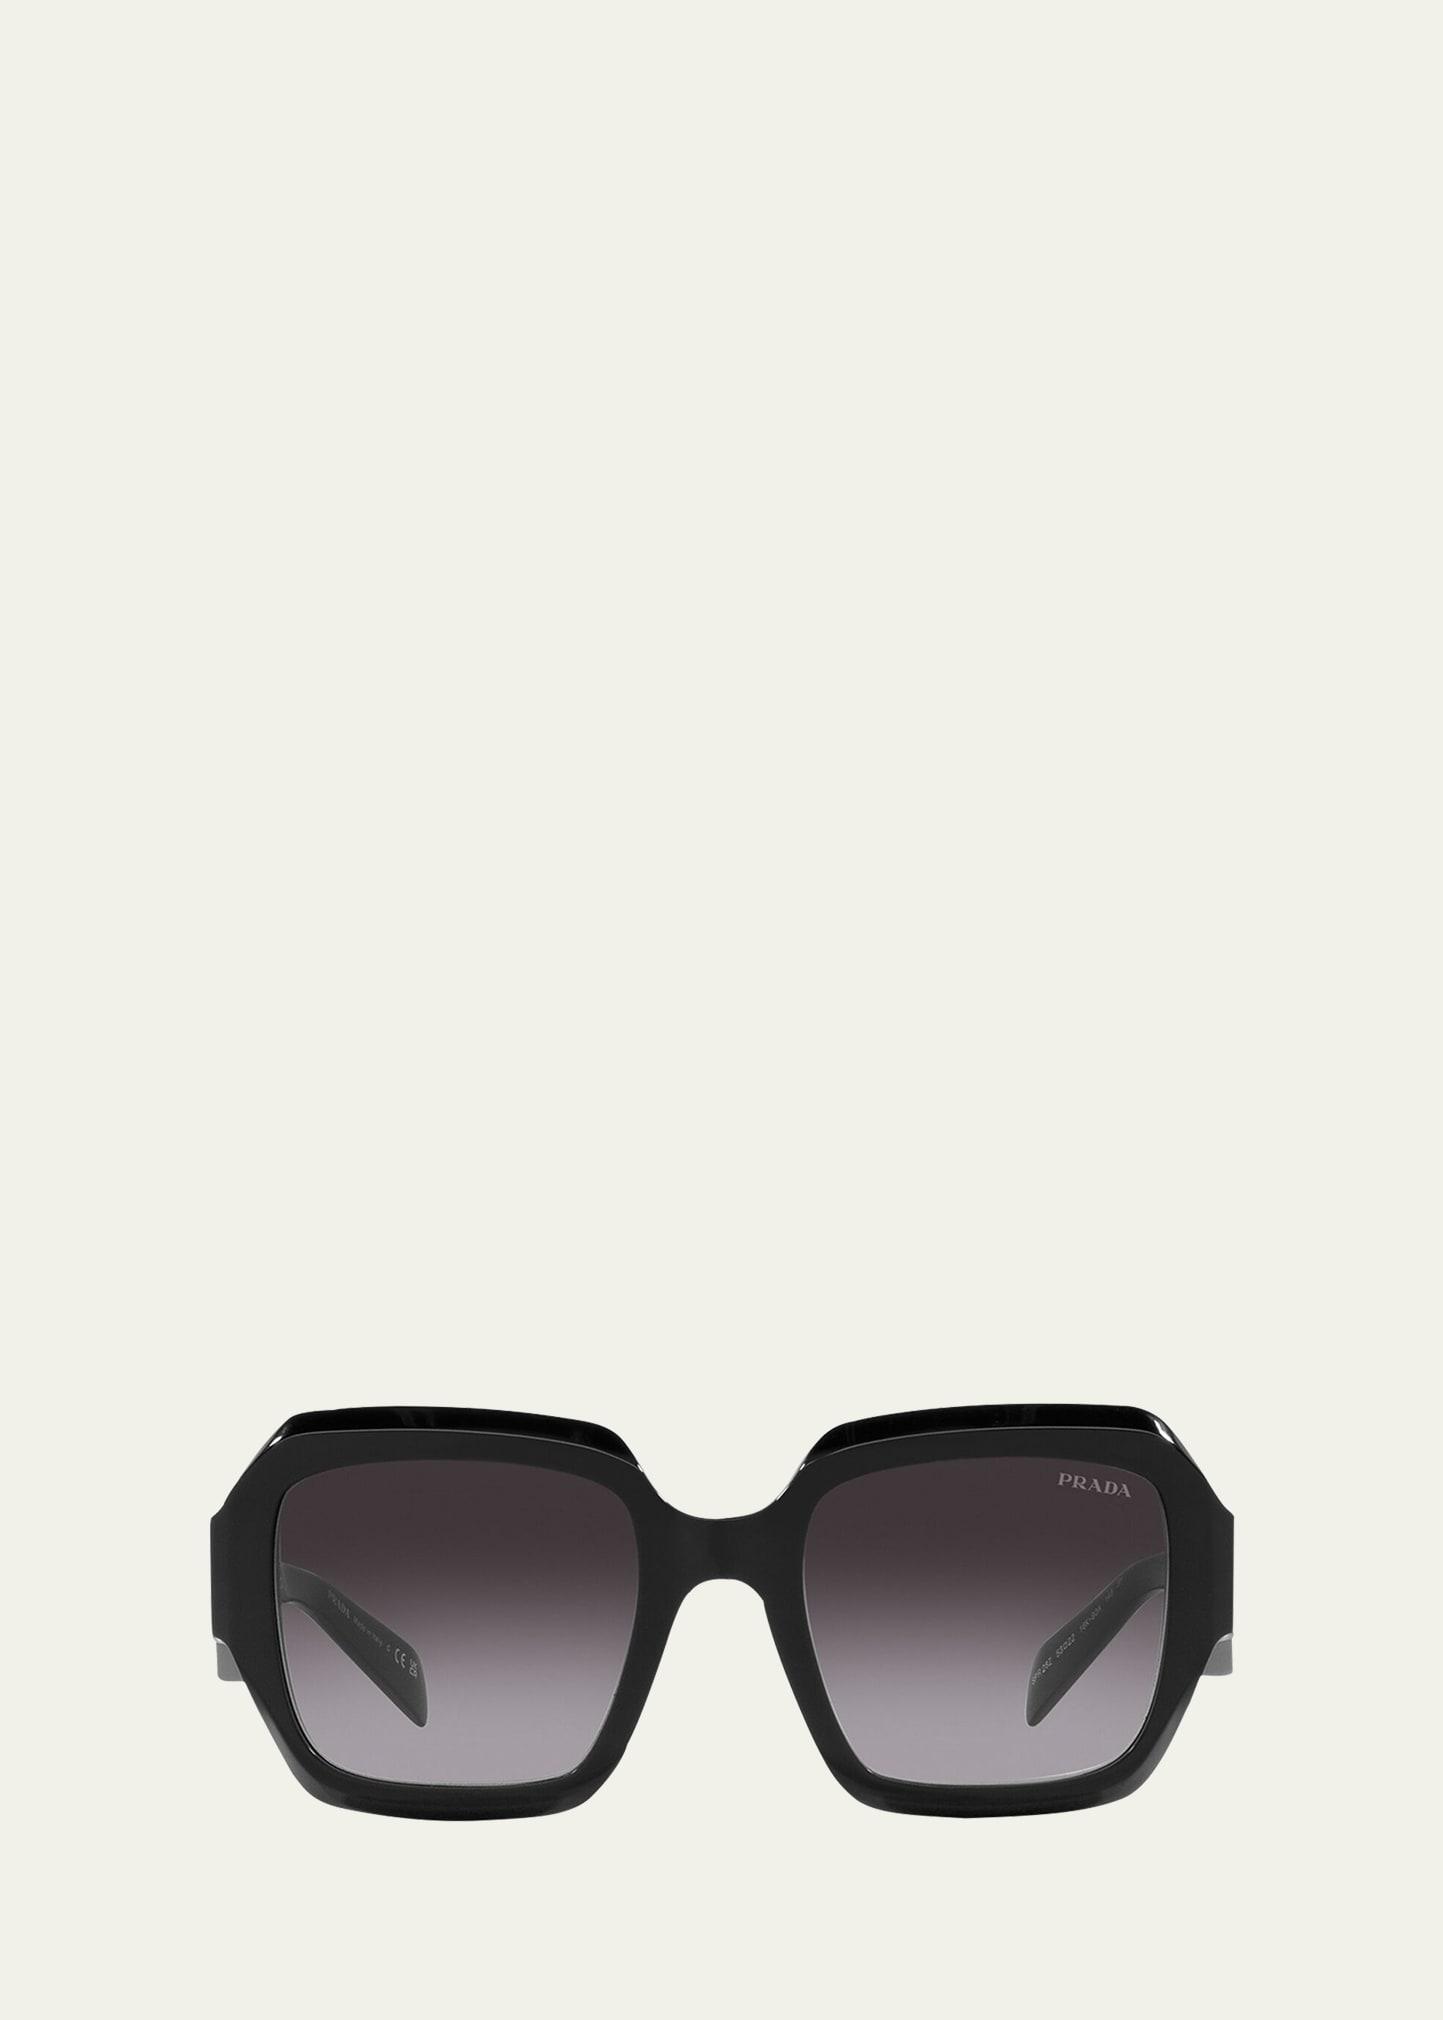 Prada 53mm Irregular Sunglasses Product Image